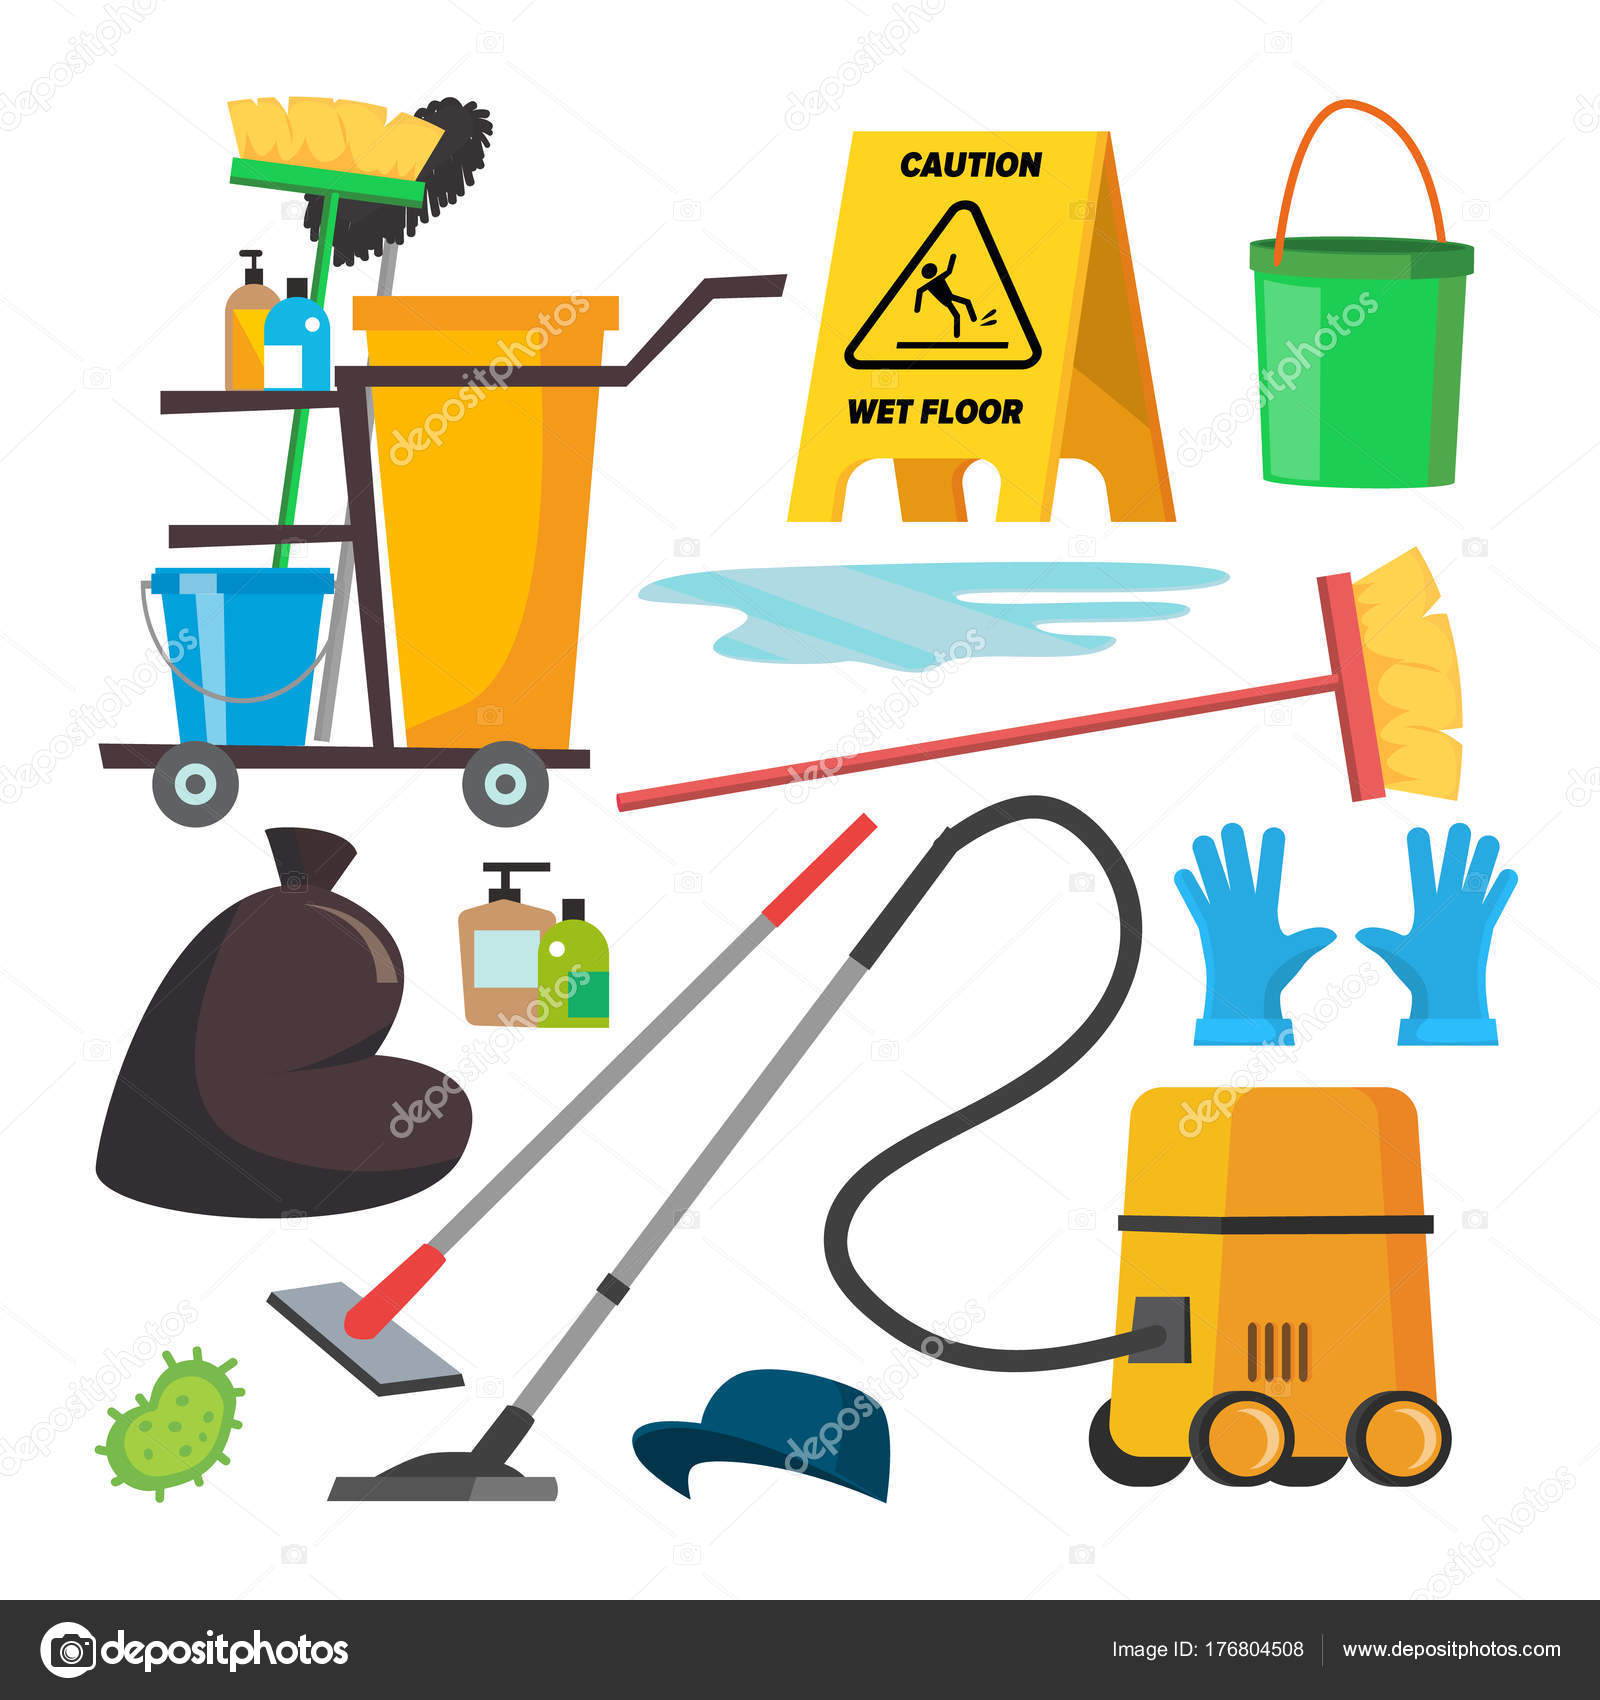 https://st3.depositphotos.com/4111759/17680/v/1600/depositphotos_176804508-stock-illustration-cleaning-supplies-vector-professional-commercial.jpg